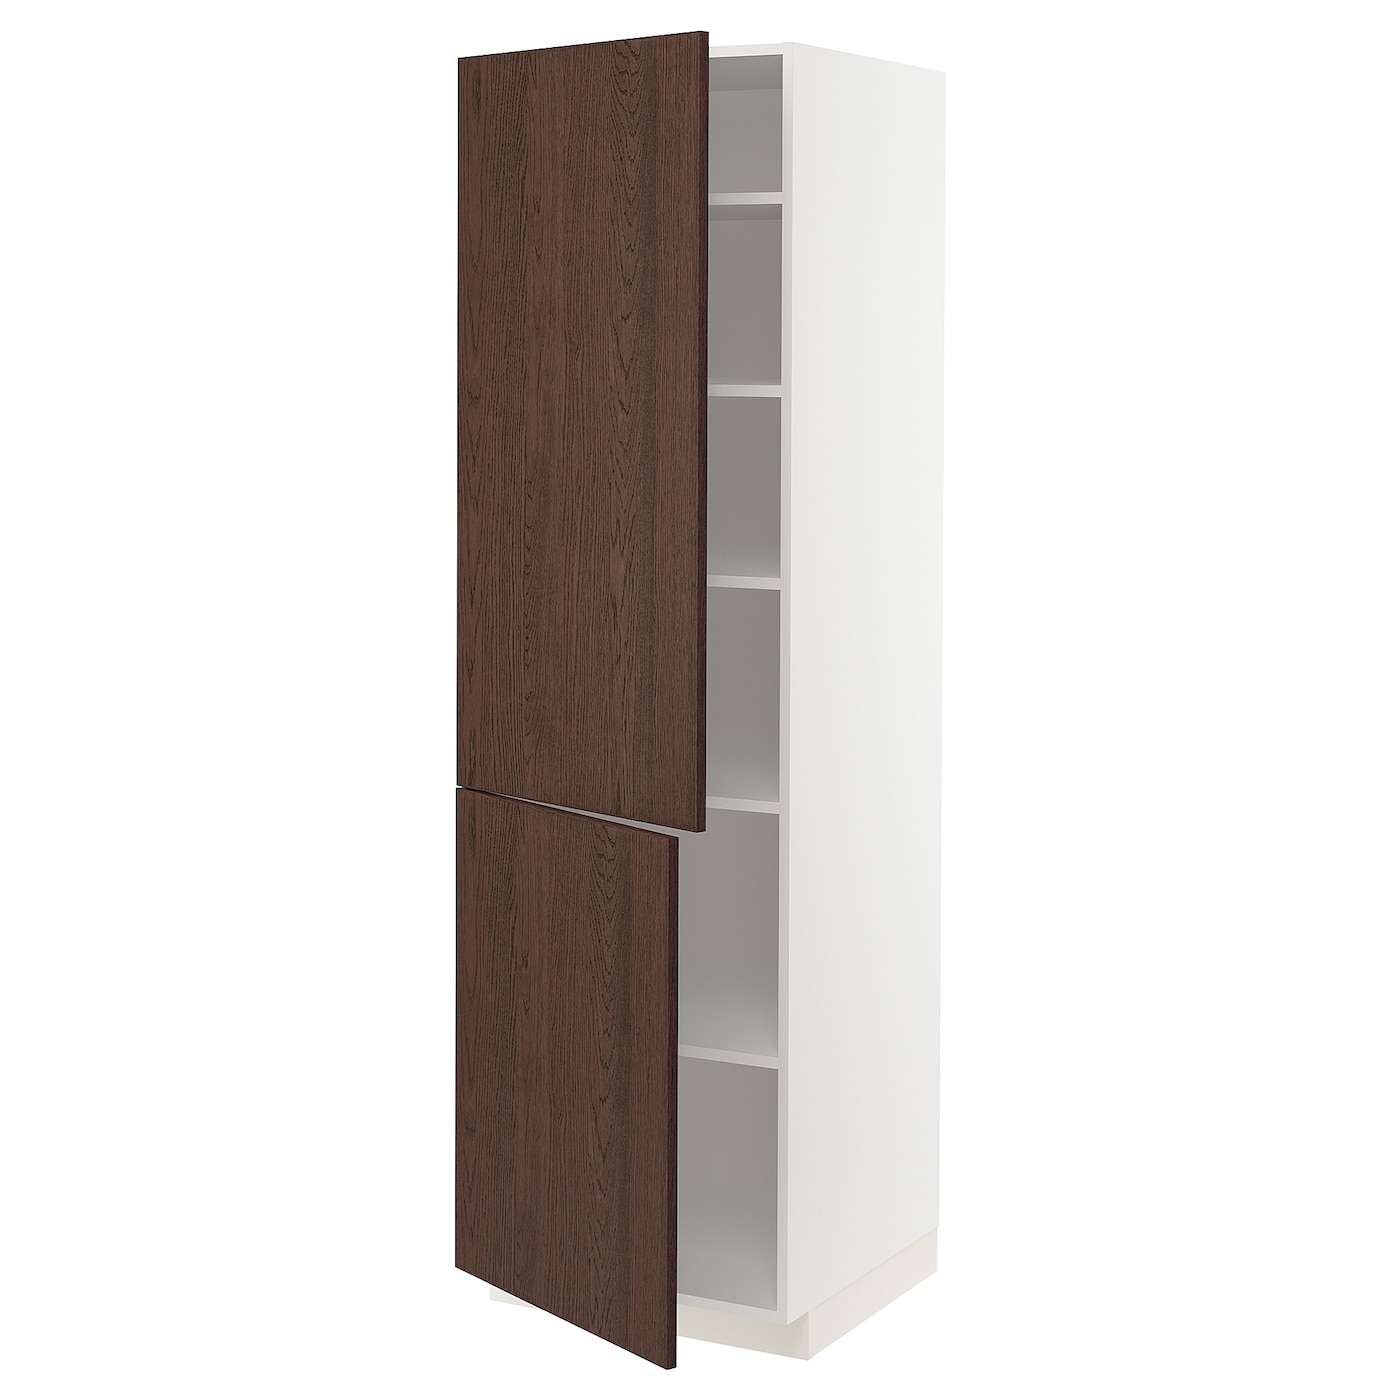 Высокий шкаф - IKEA METOD/МЕТОД ИКЕА, 200х60х60 см, белый/коричневый